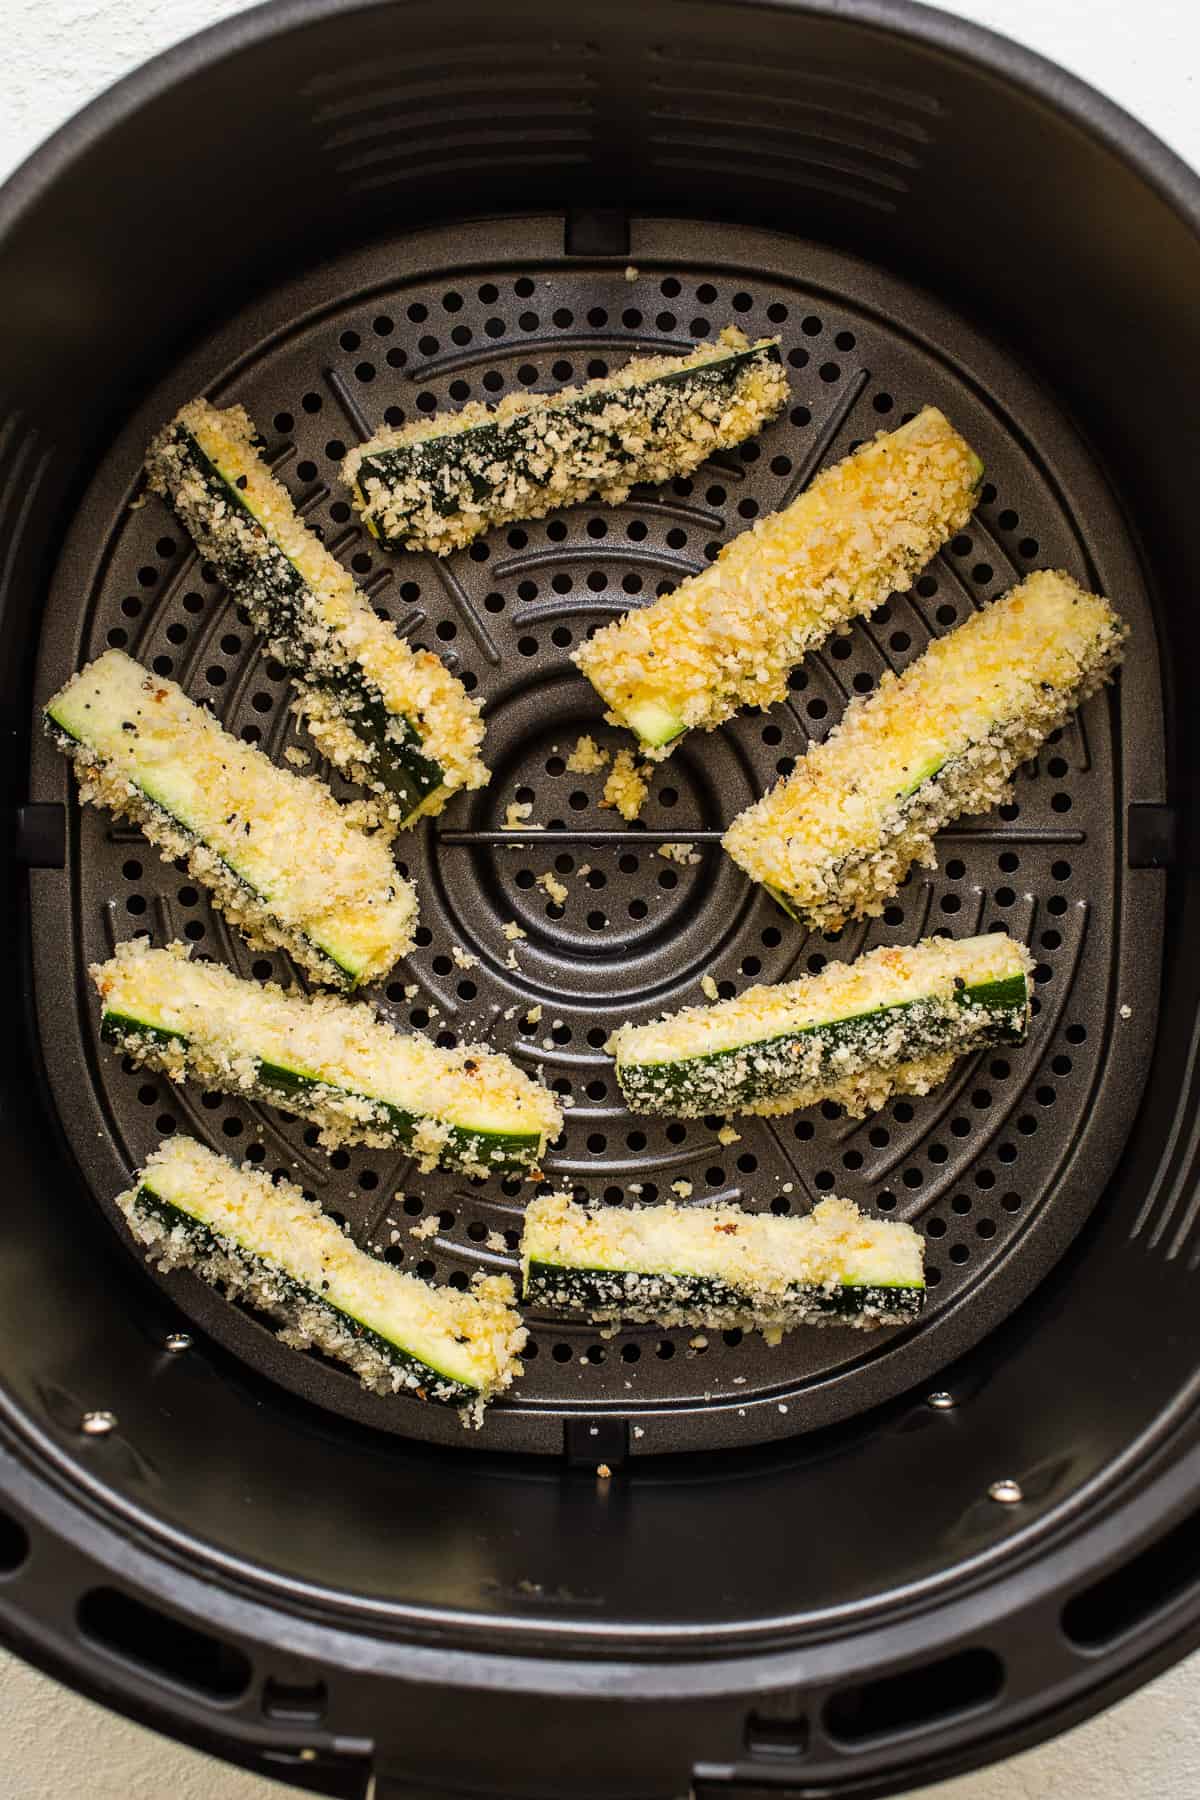 zucchini fres in air fryer.